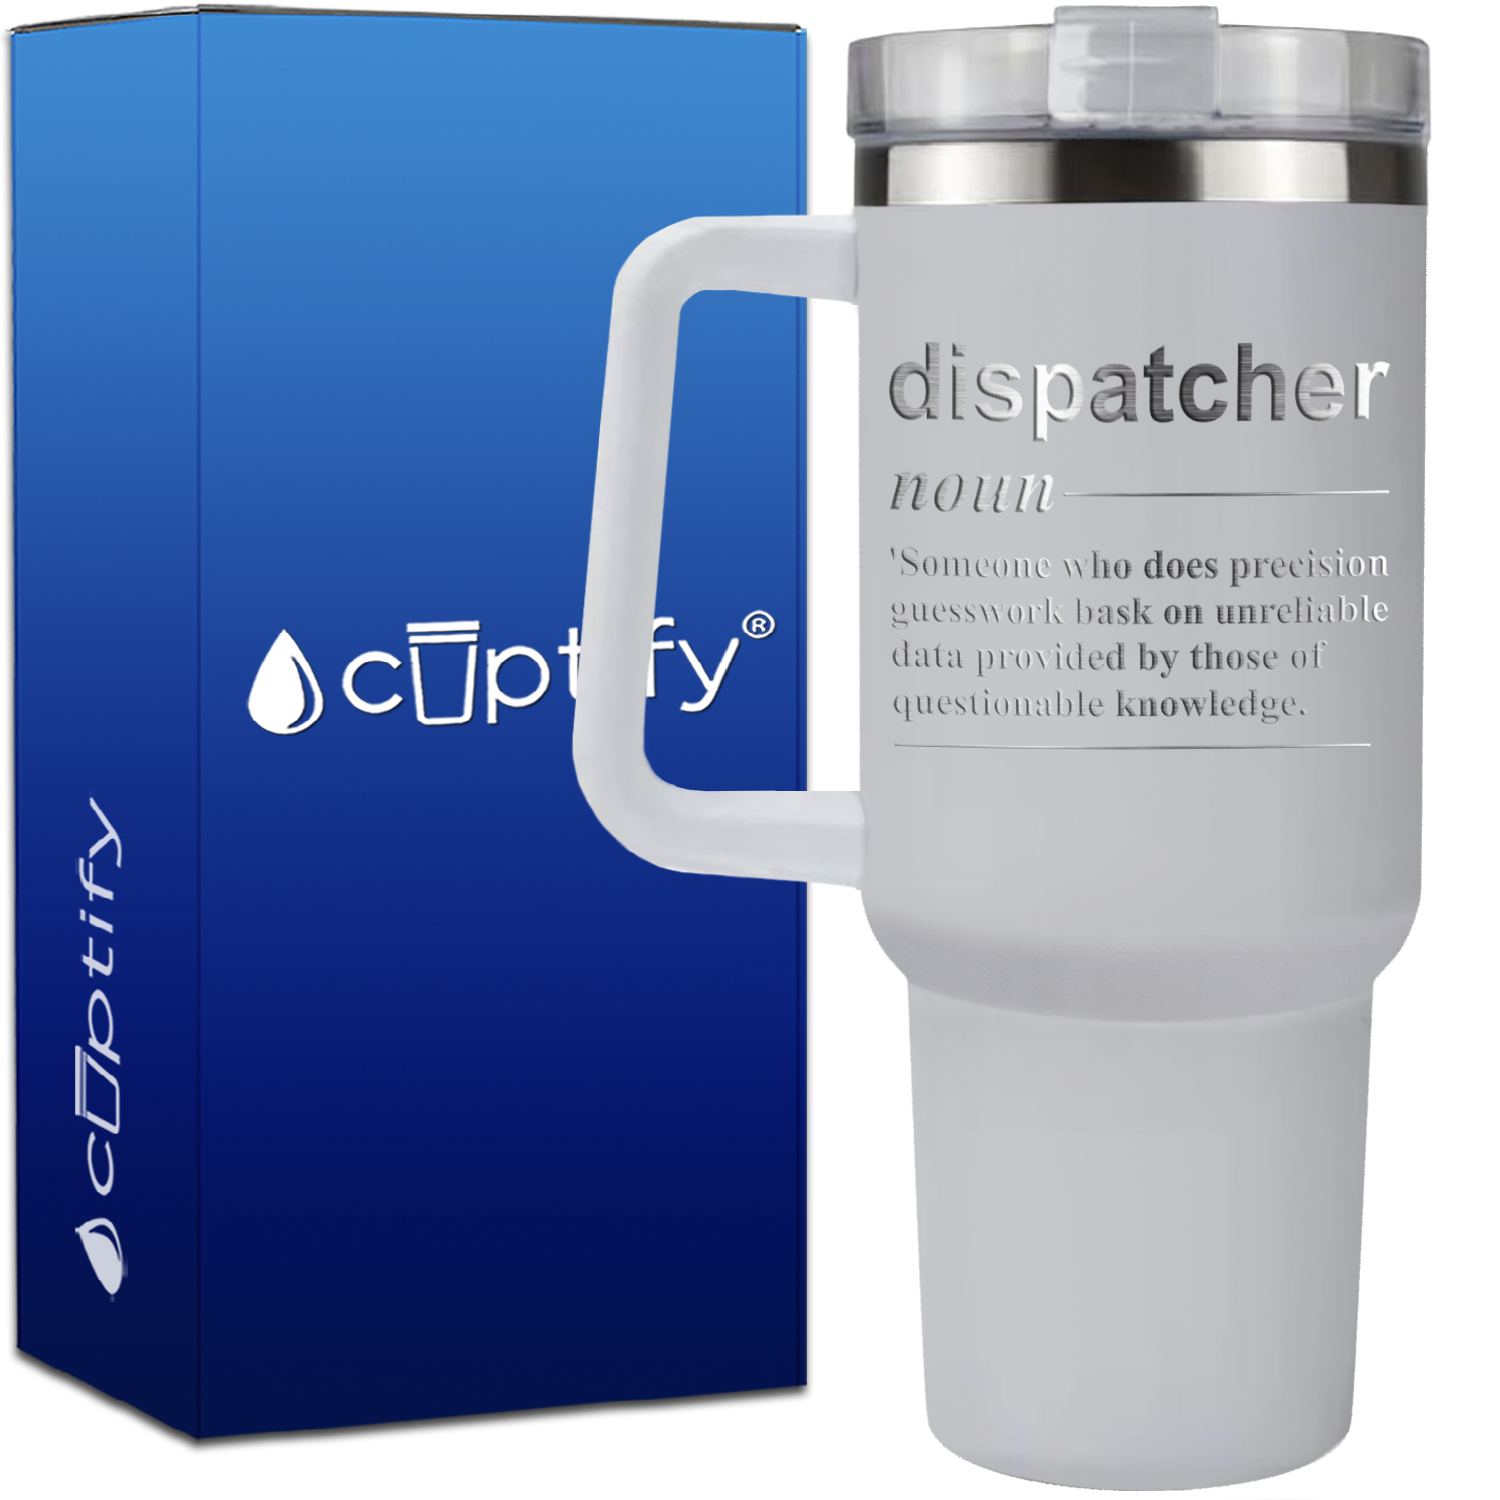 Dispatcher Noun Definition on 40oz Dispatcher Traveler Mug